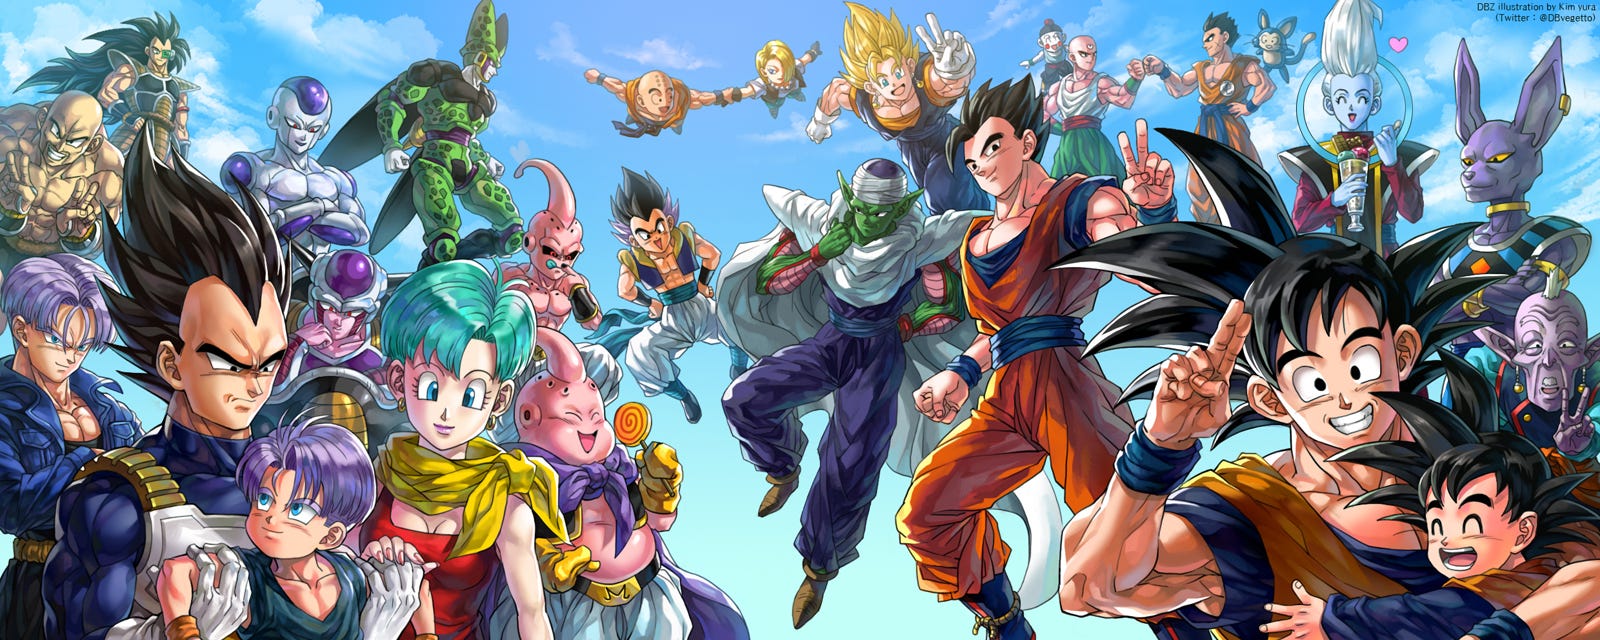 Dragon Ball Super: Super Hero - Autor de Dragon Ball opina sobre